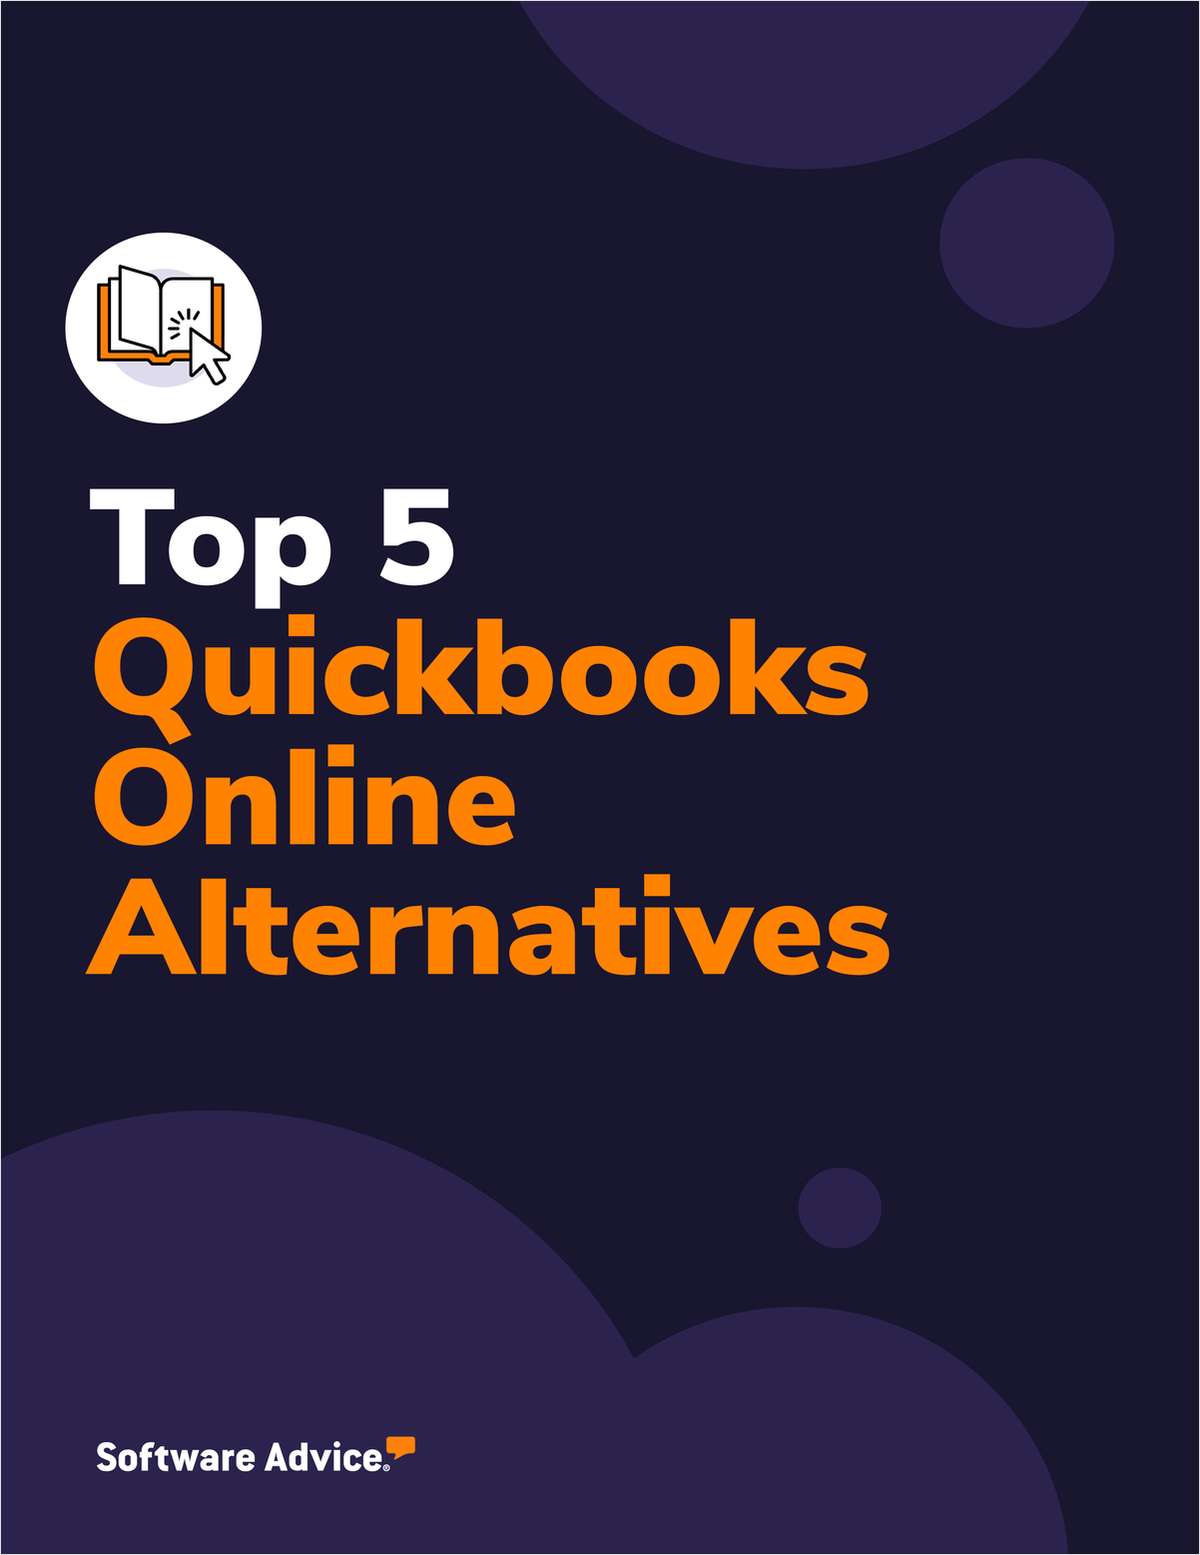 Top 5 Quickbooks Online Alternatives